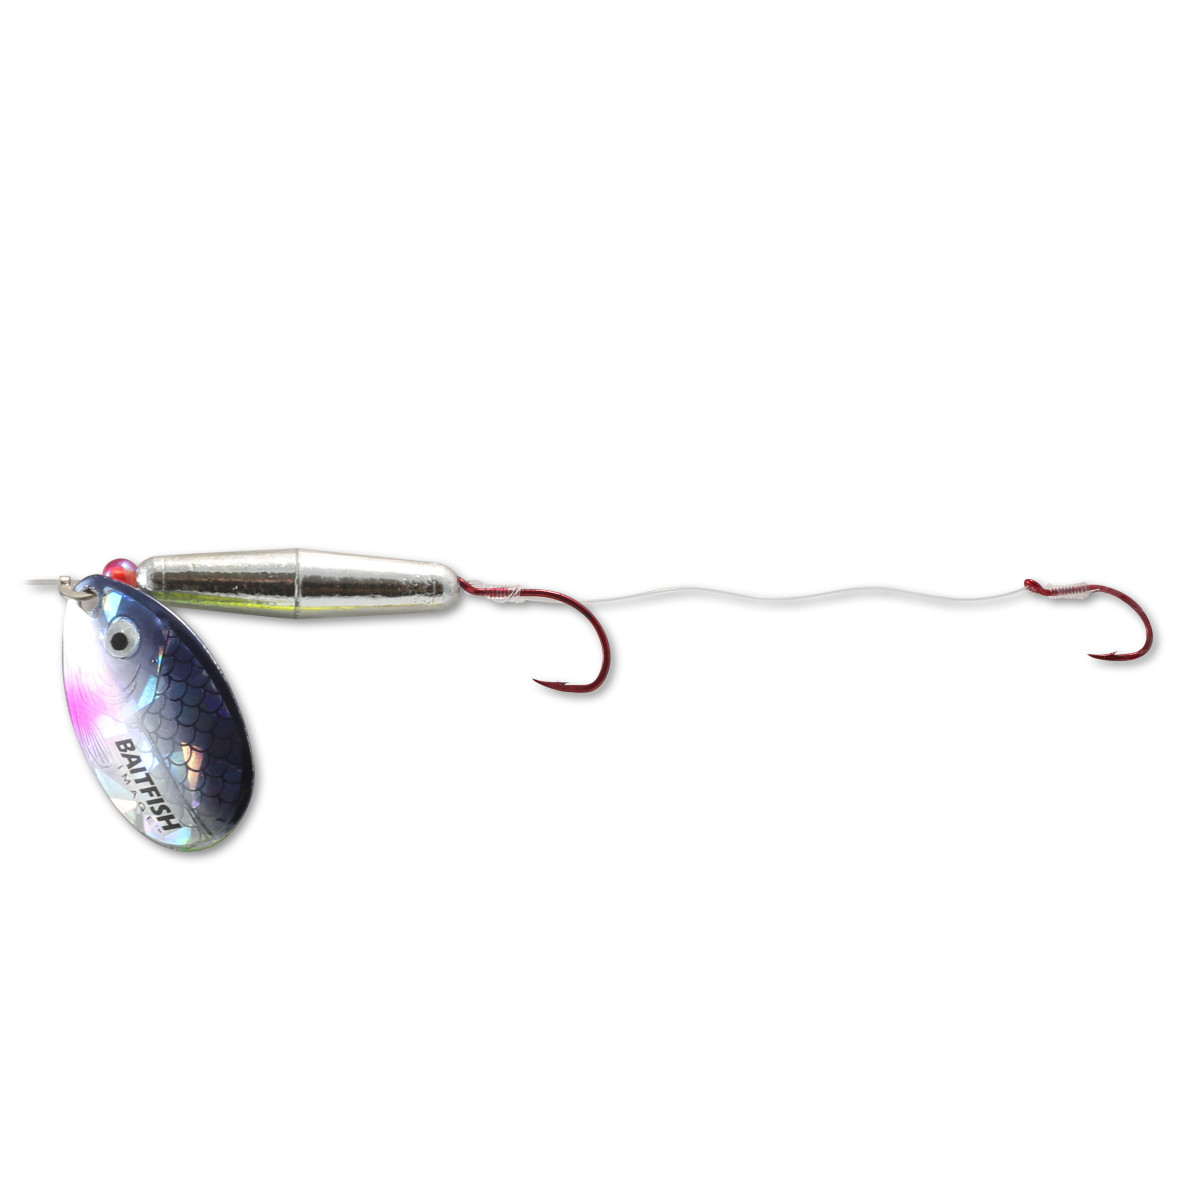 GITZIT RADON SPINNER Silver BLADE 5/8 inline Spinner Fishing Lure